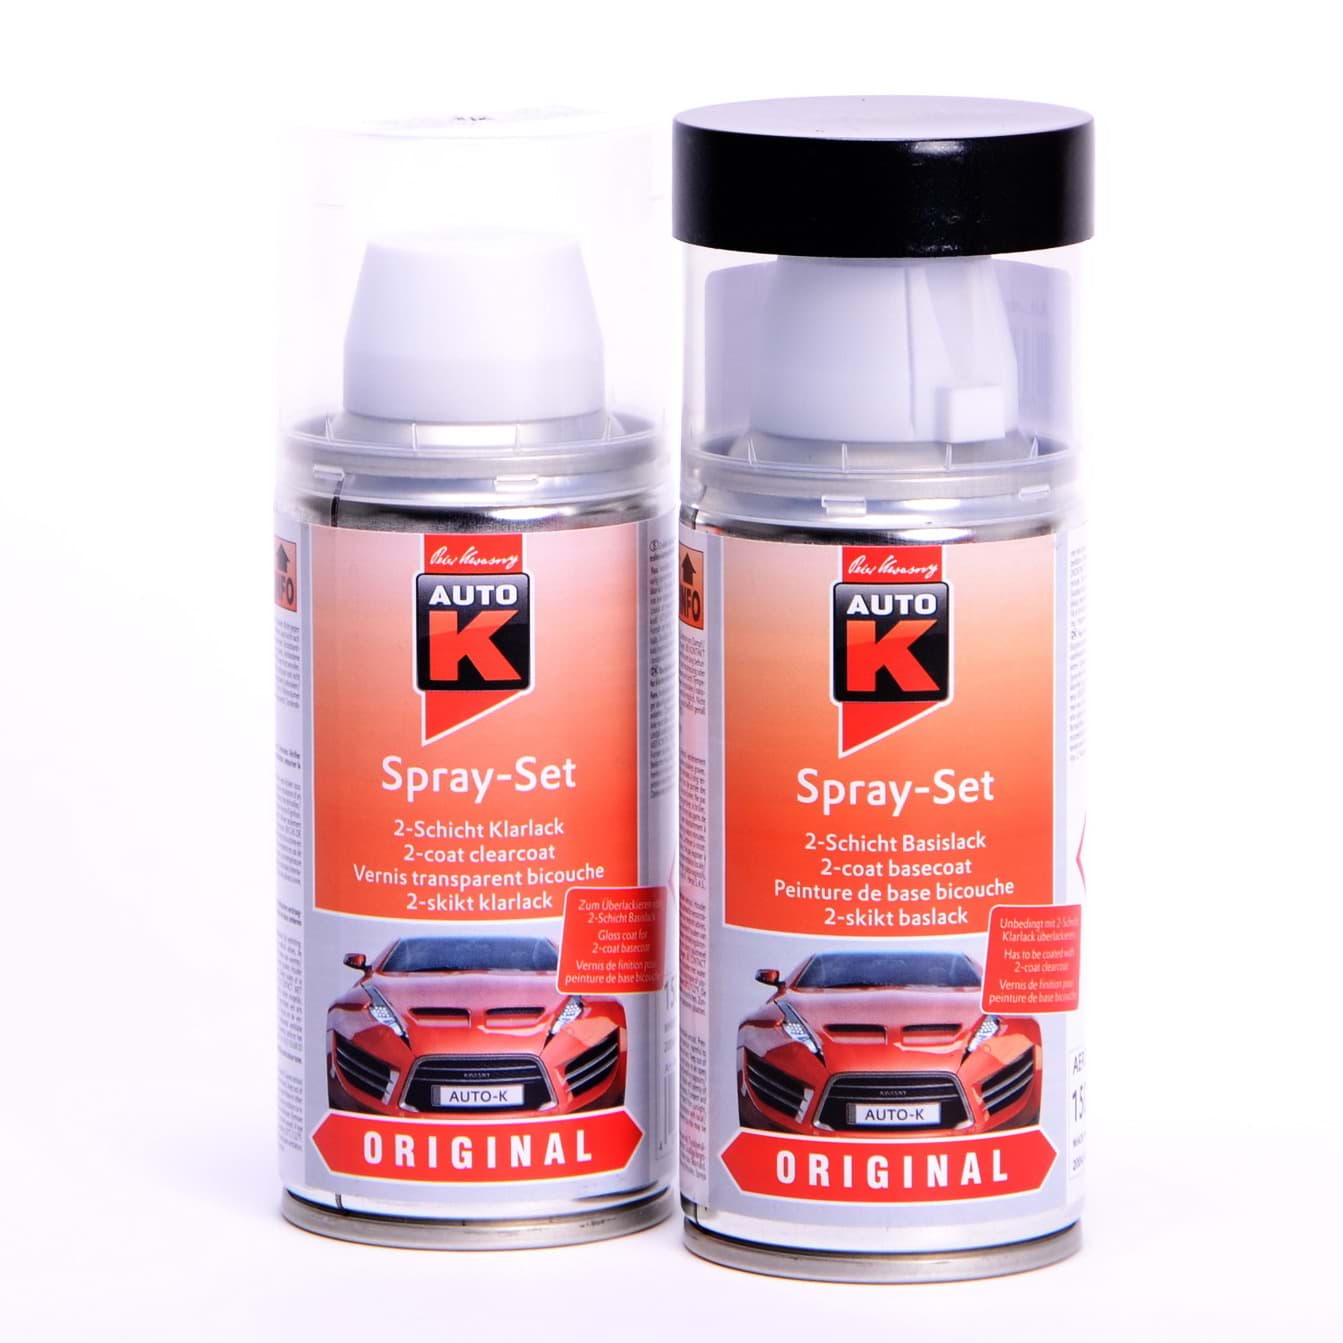 Auto-K Spray-Set Autolack für Opel 271 Lagunenblau met 21368 resmi